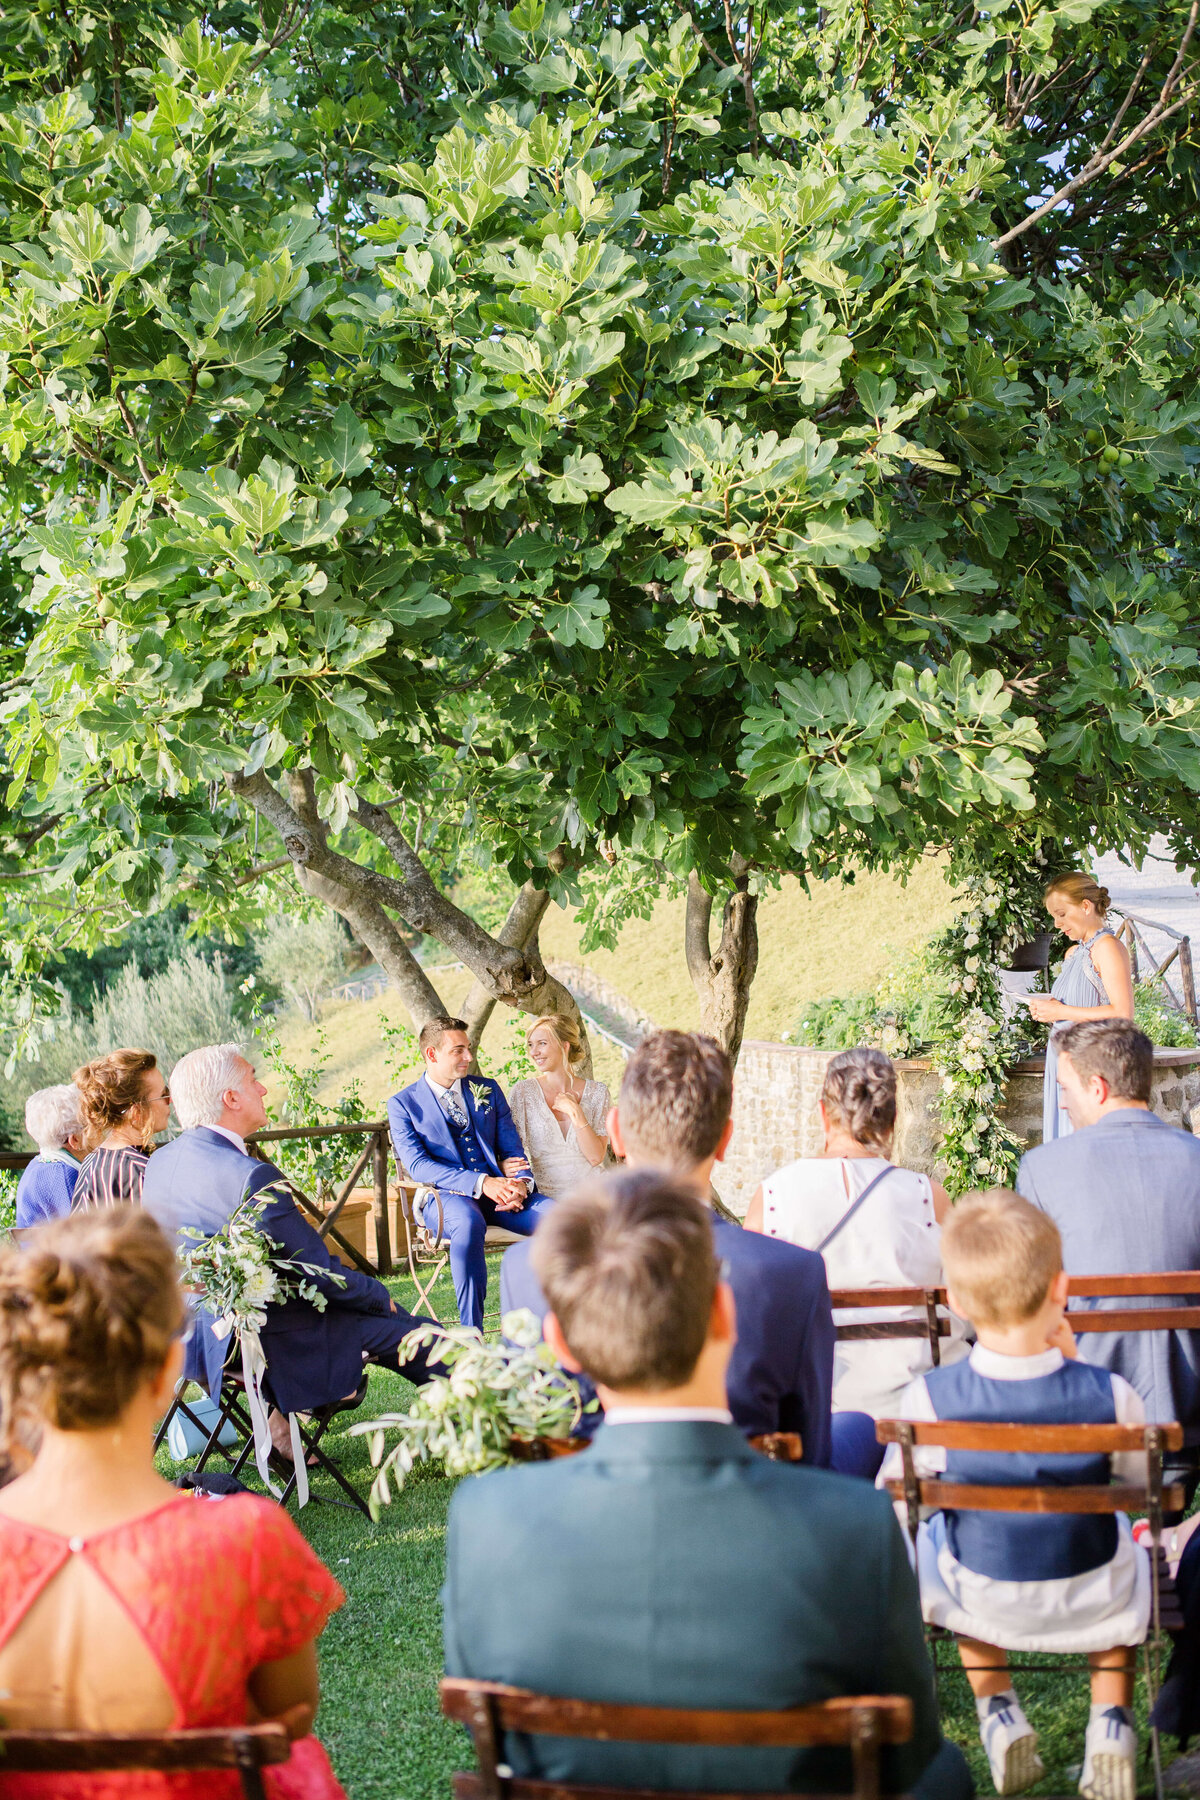 Wedding C&B - Umbria - Italy 2019 28